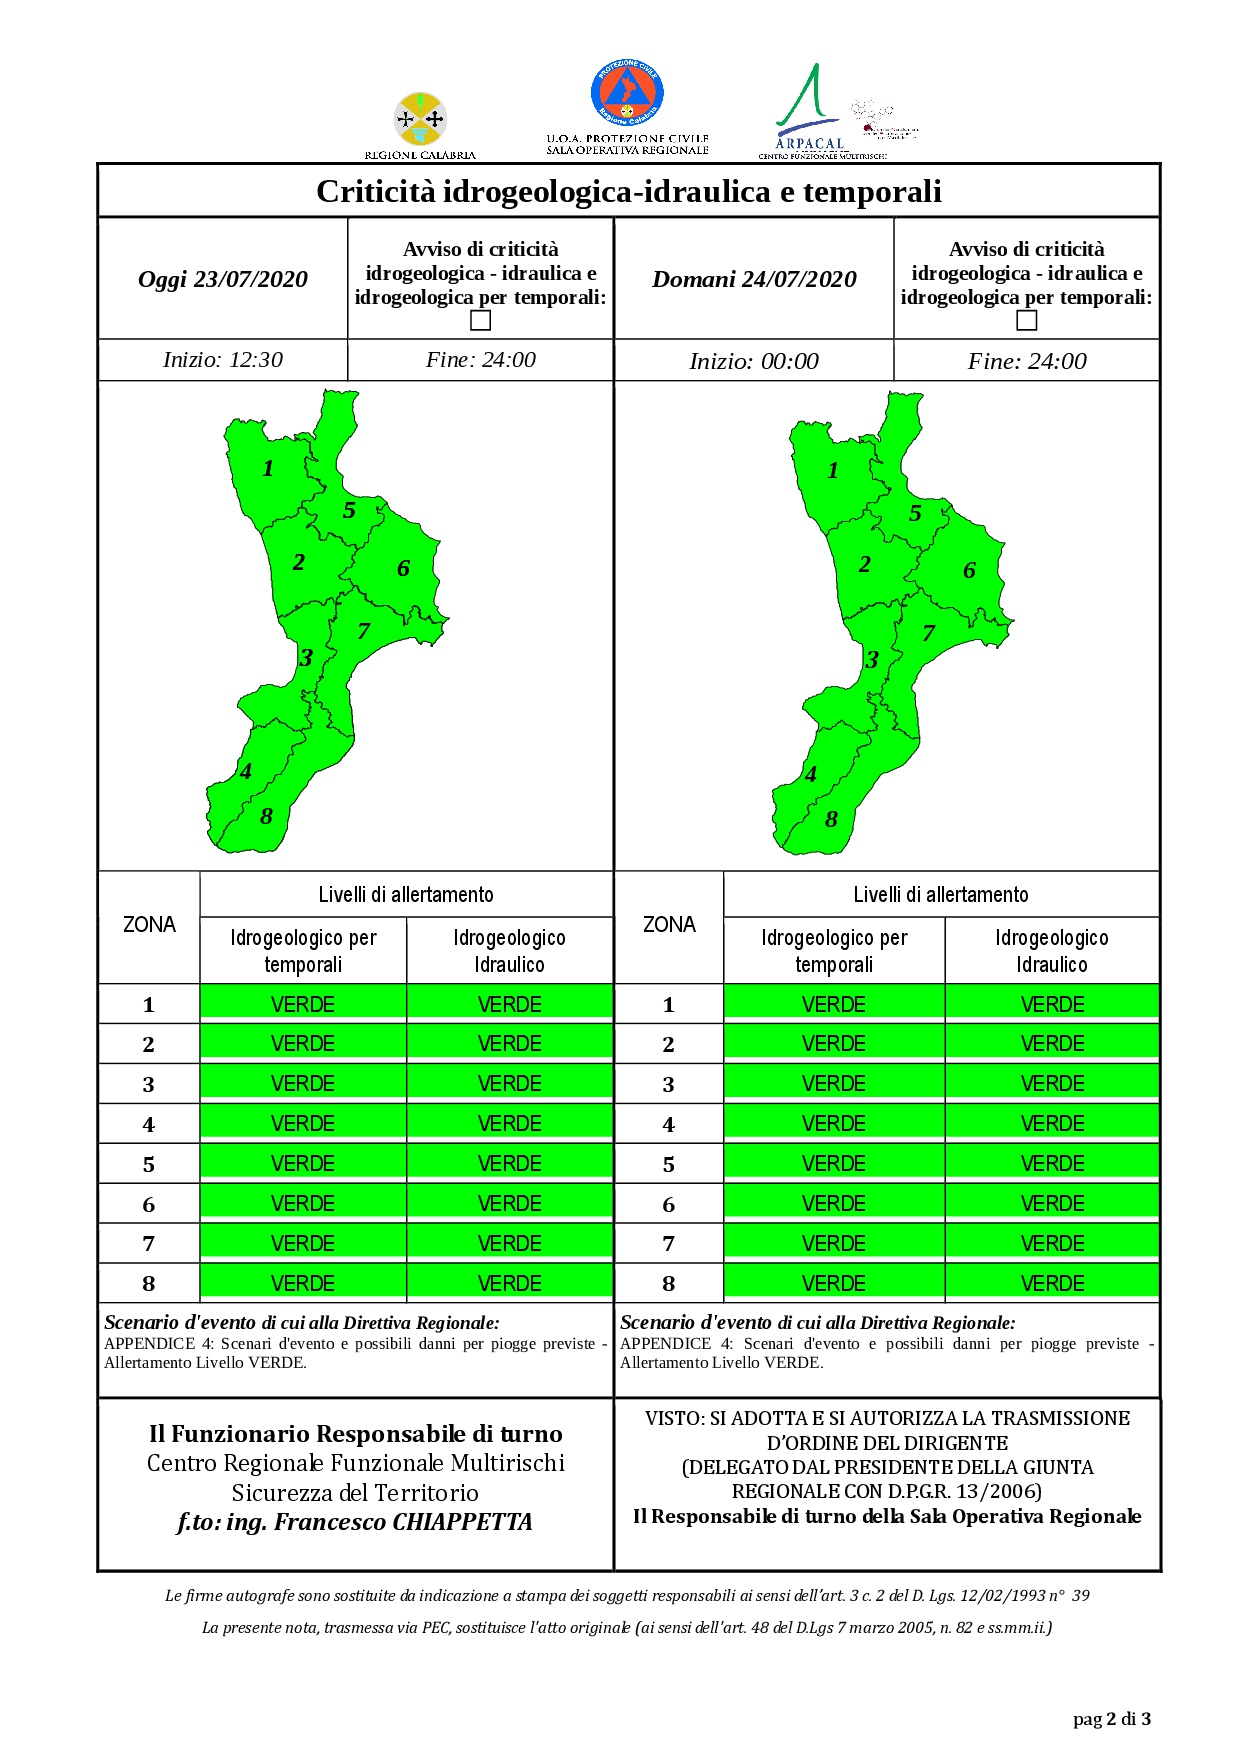 Criticità idrogeologica-idraulica e temporali in Calabria 23-07-2020